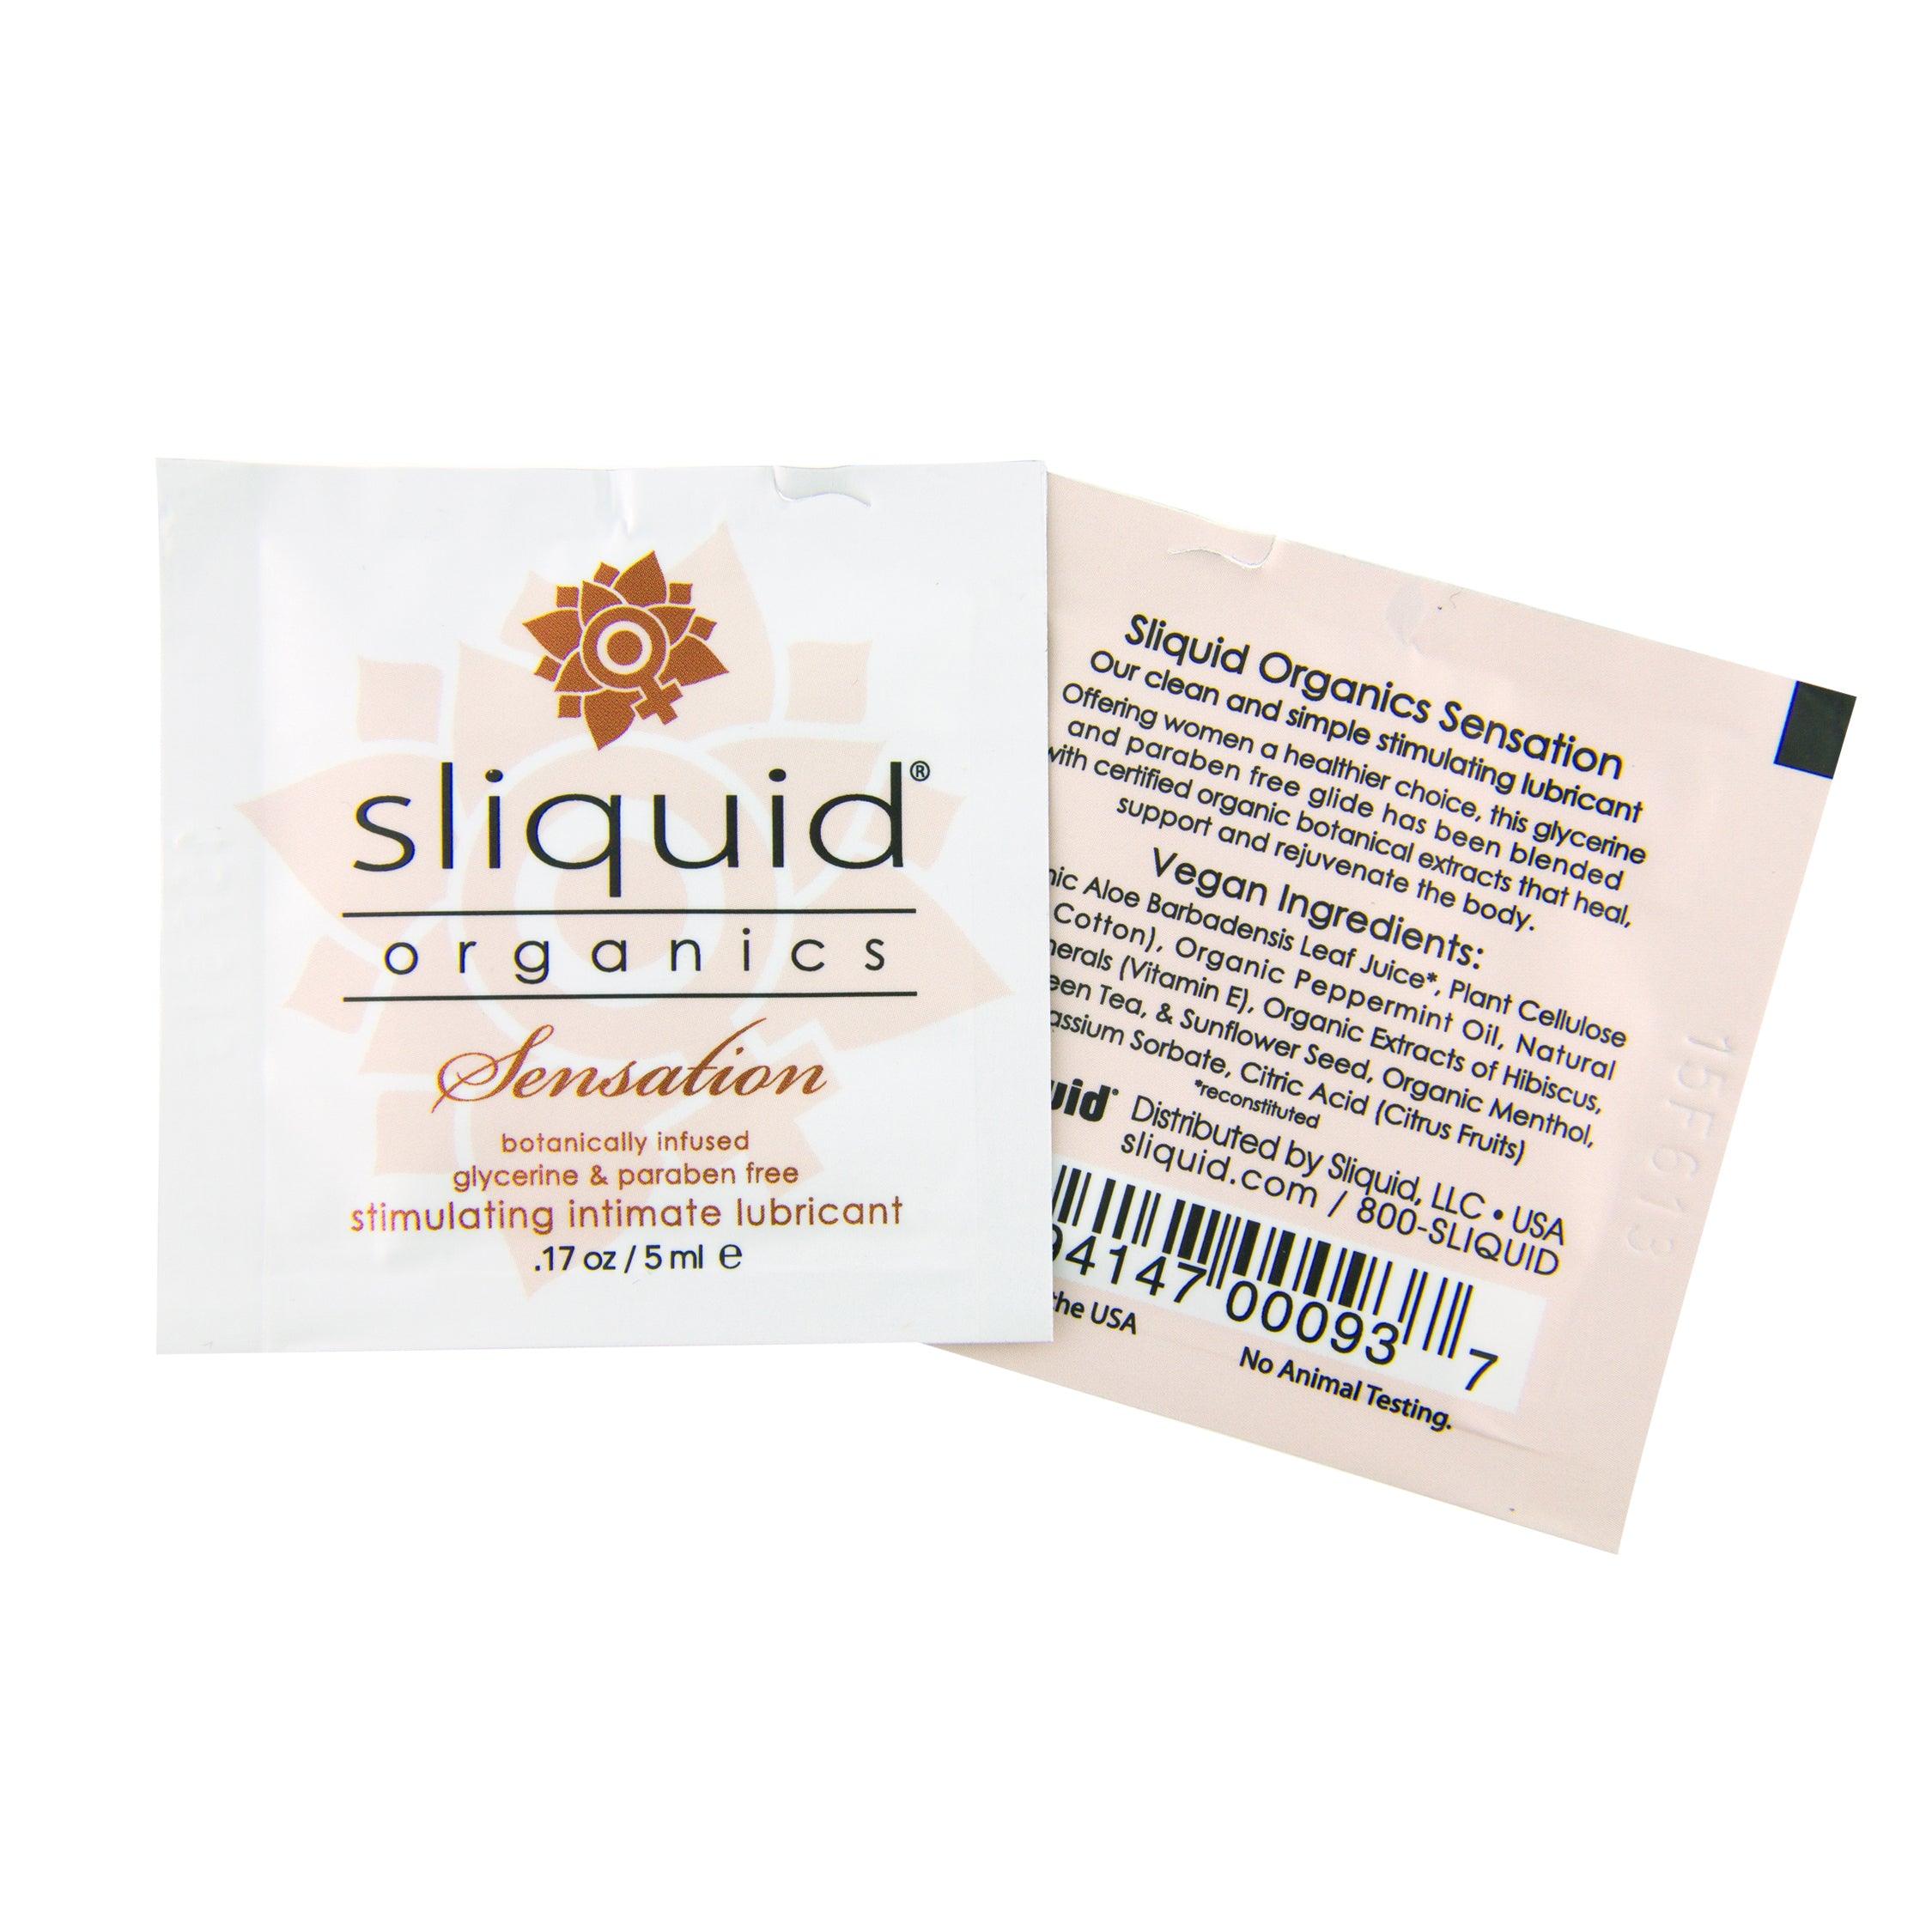 Sliquid Organics Sensation (Warming) • Water Lubricant - Happibee